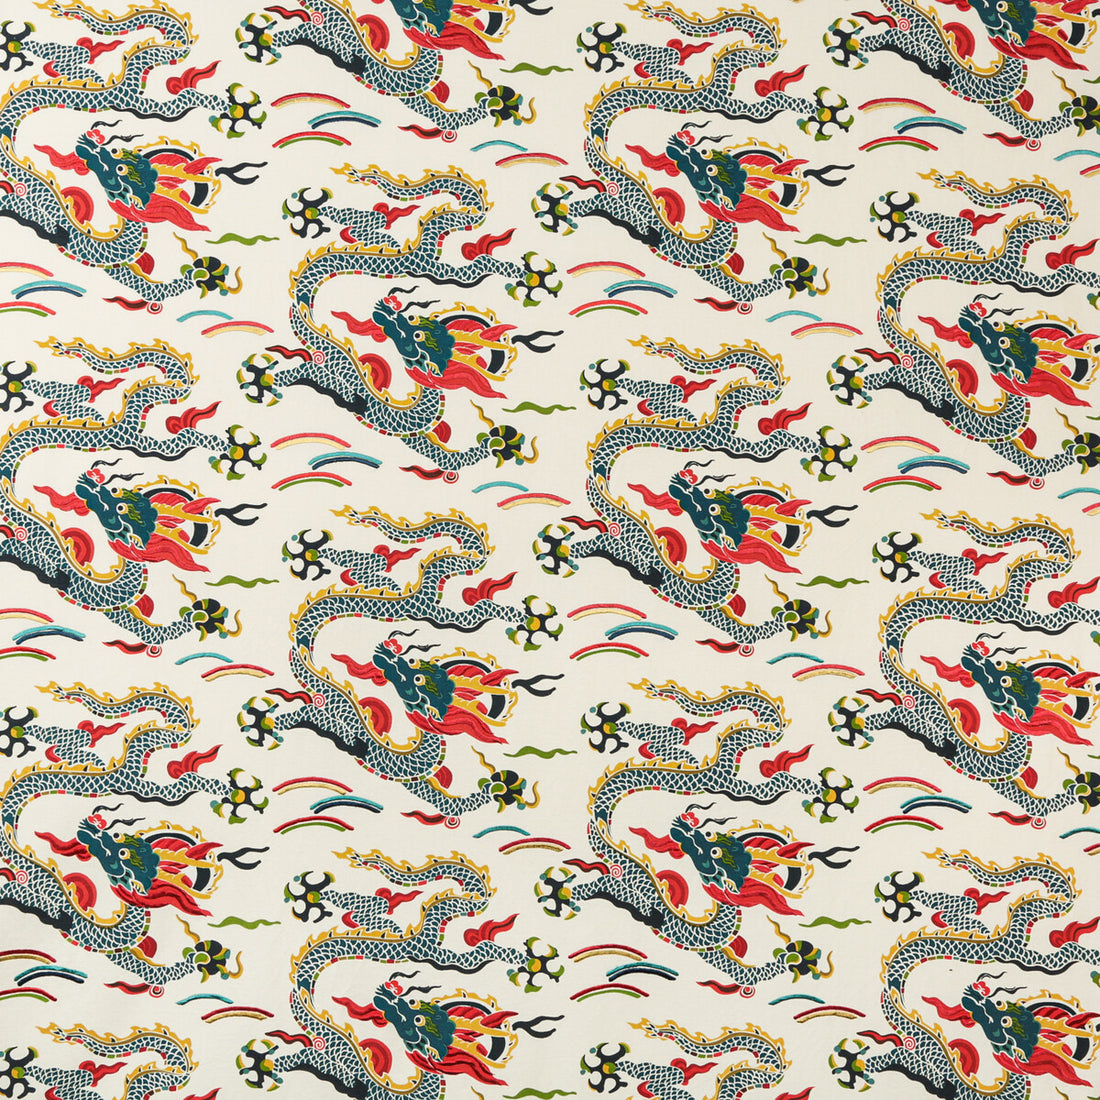 Zen Dragon fabric in multi color - pattern ZEN DRAGON.519.0 - by Kravet Couture